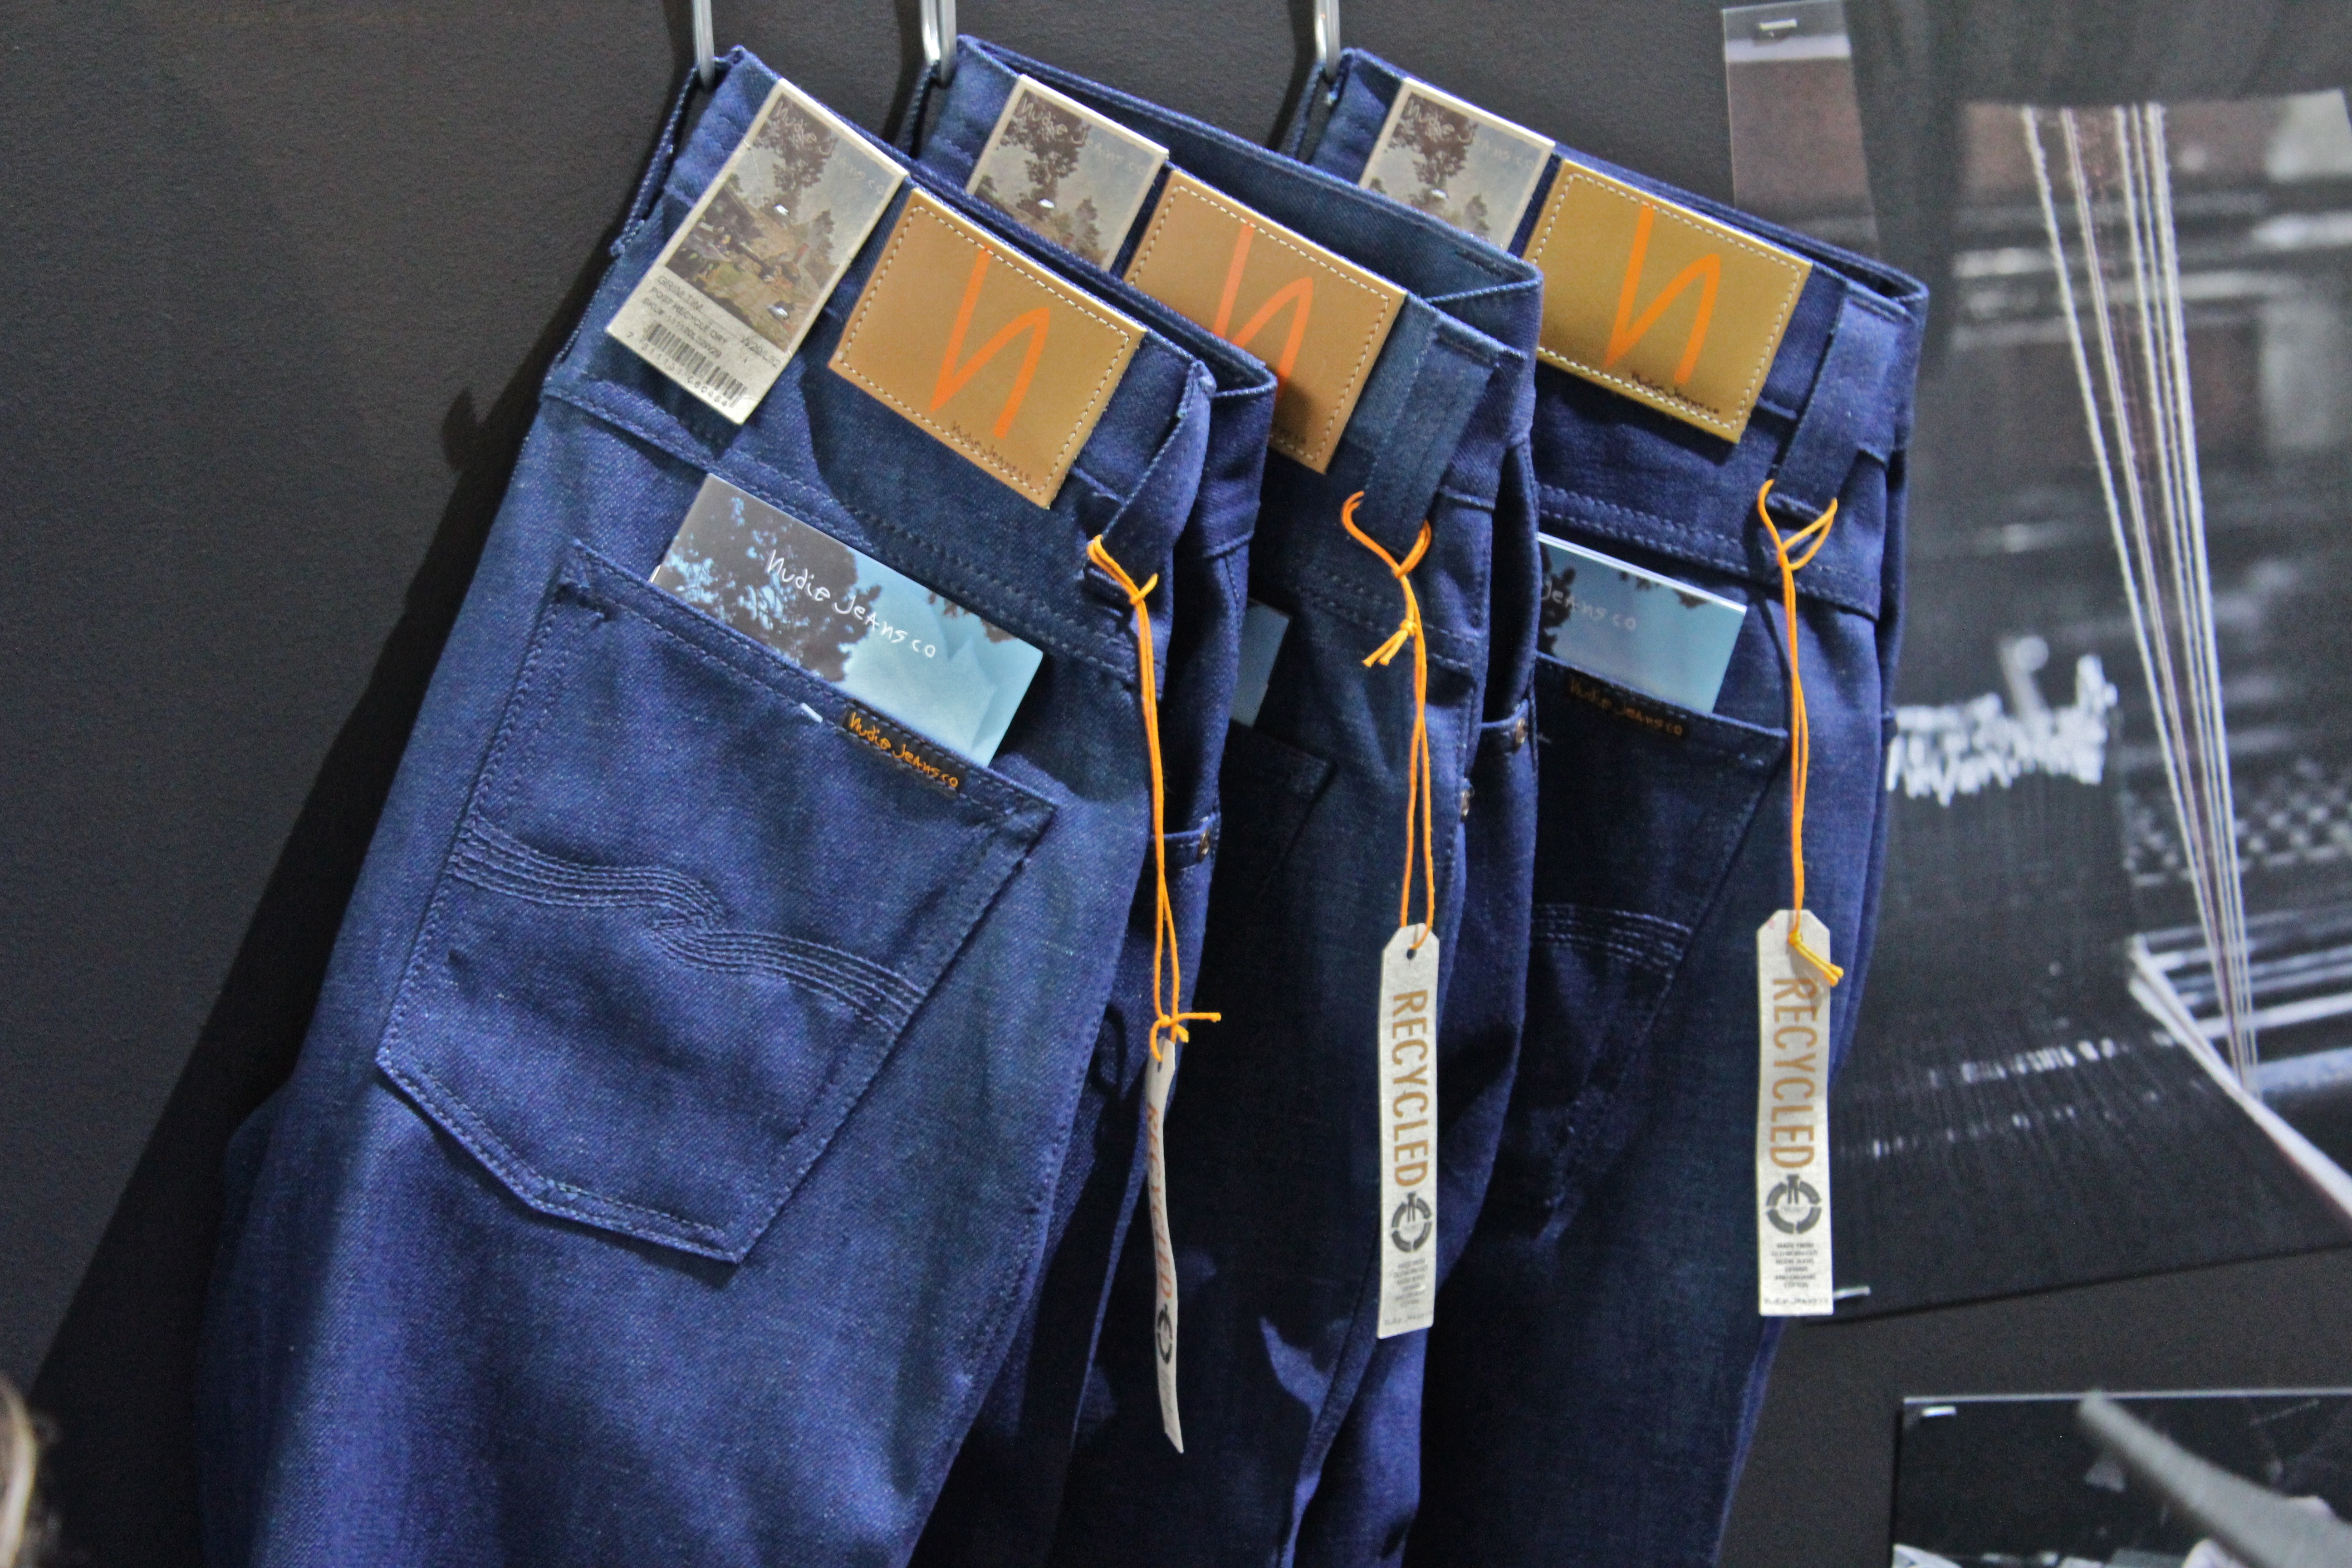 nudie jeans company